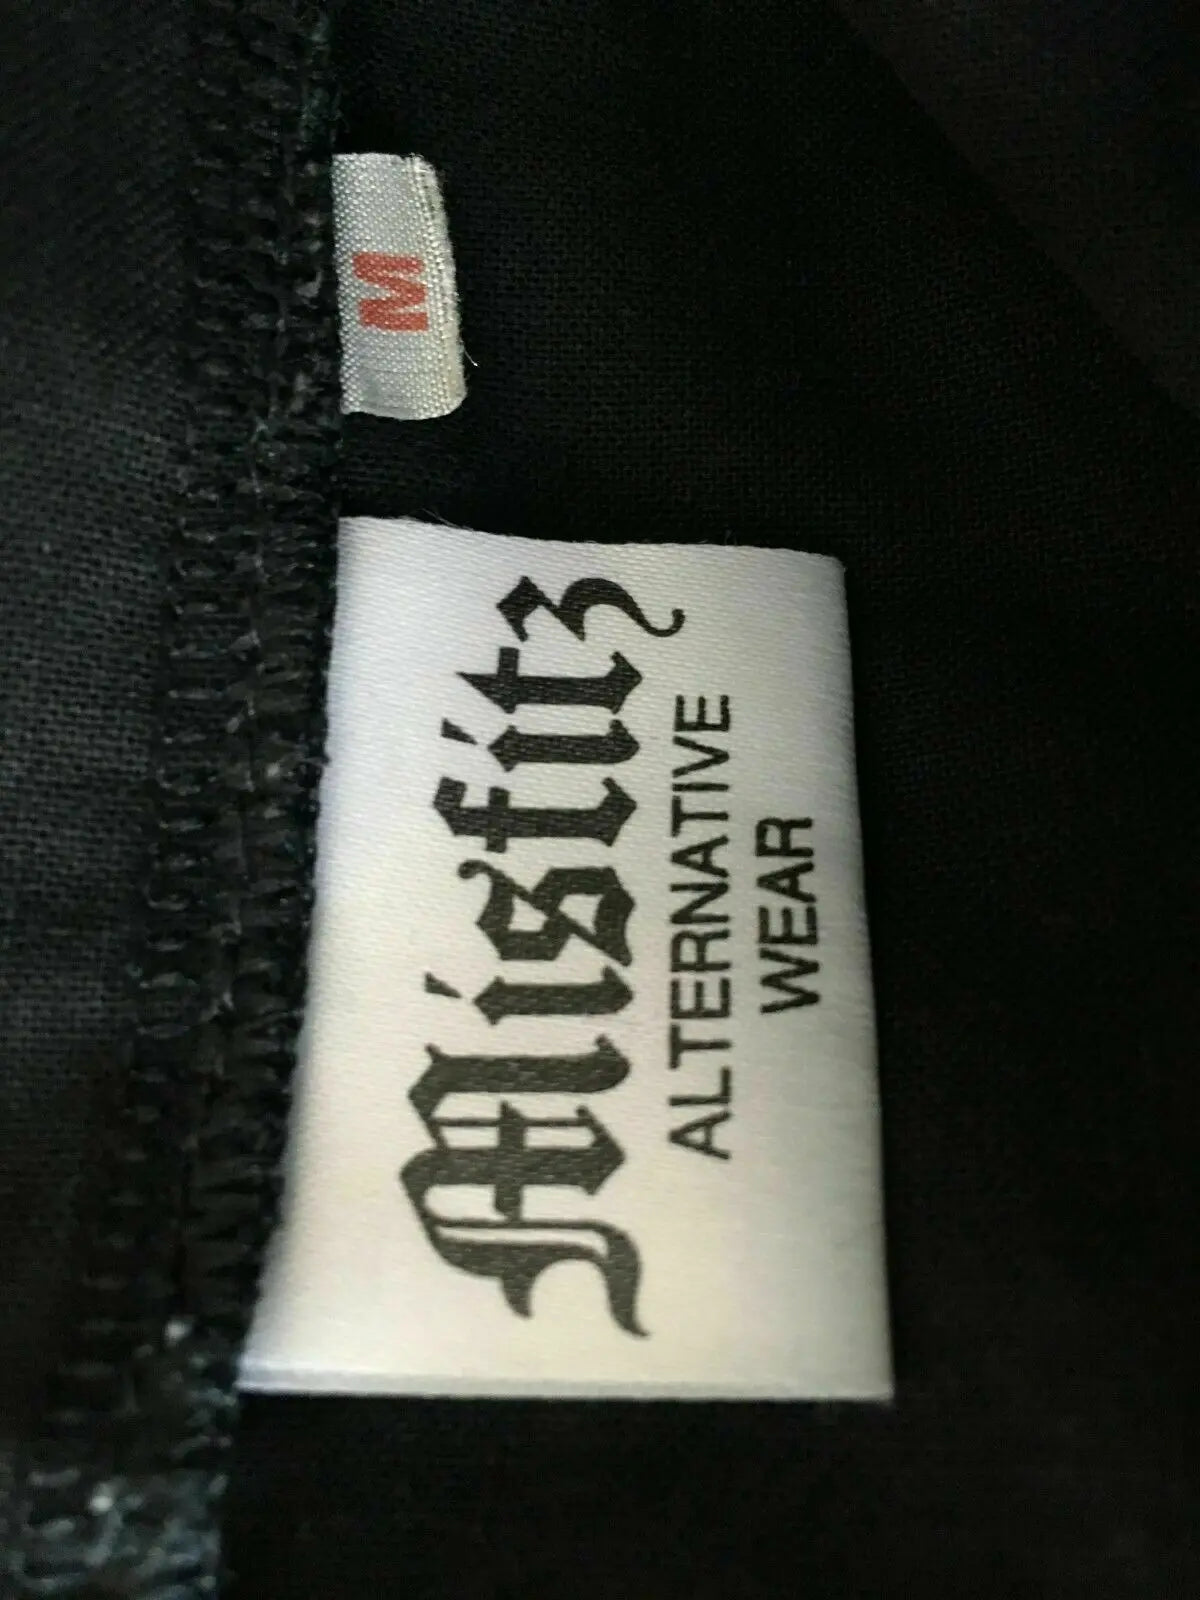 Misfitz black goth/goth/PUNK poet/pirate shirt-lace-up detail & metal d-rings Misfitz